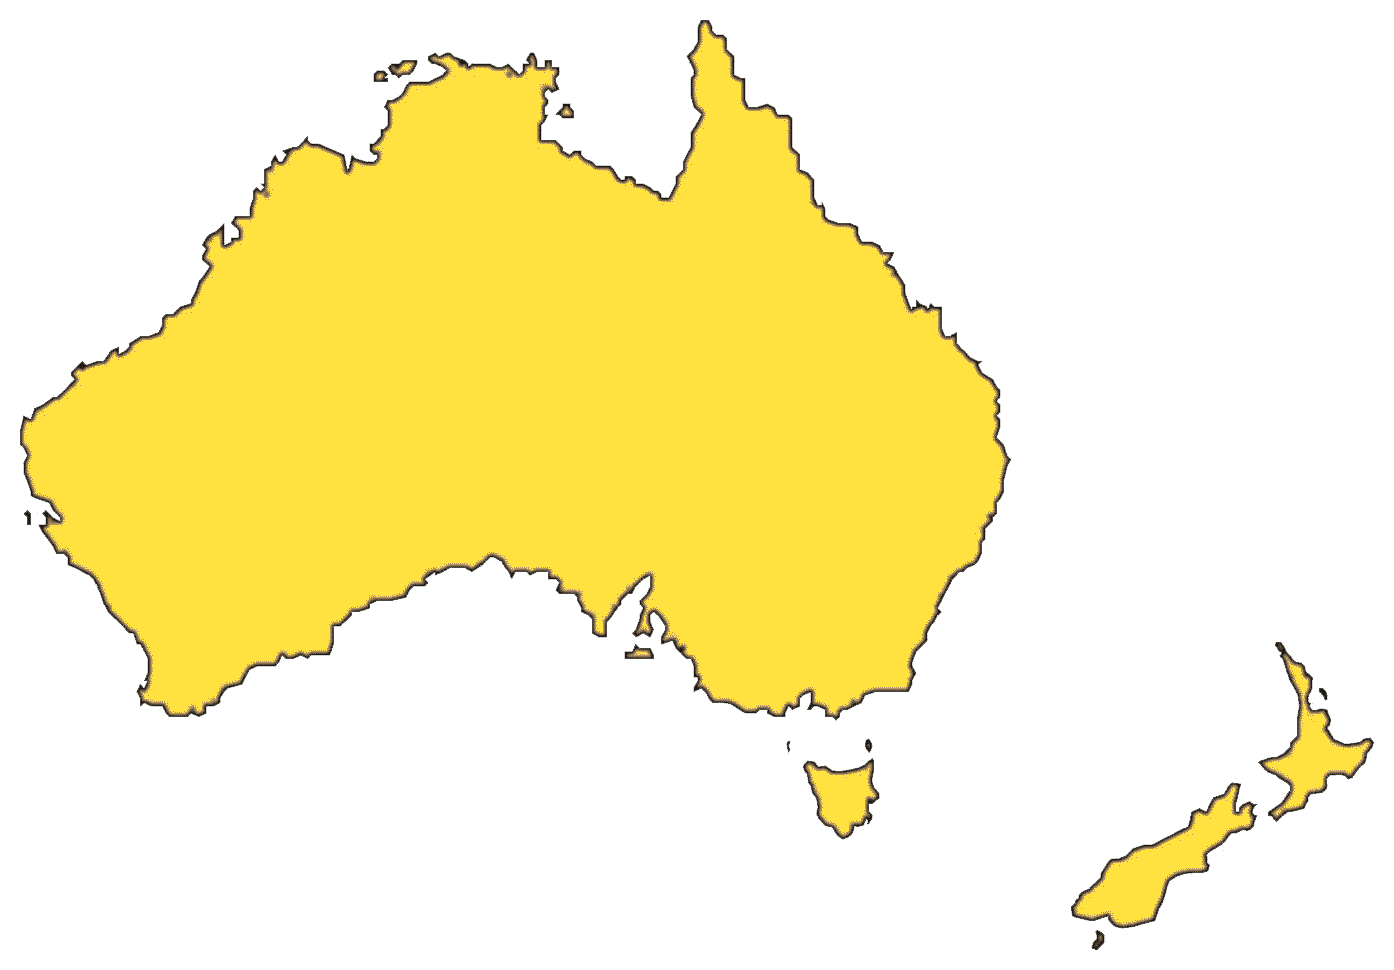 Australia Map File PNG Image